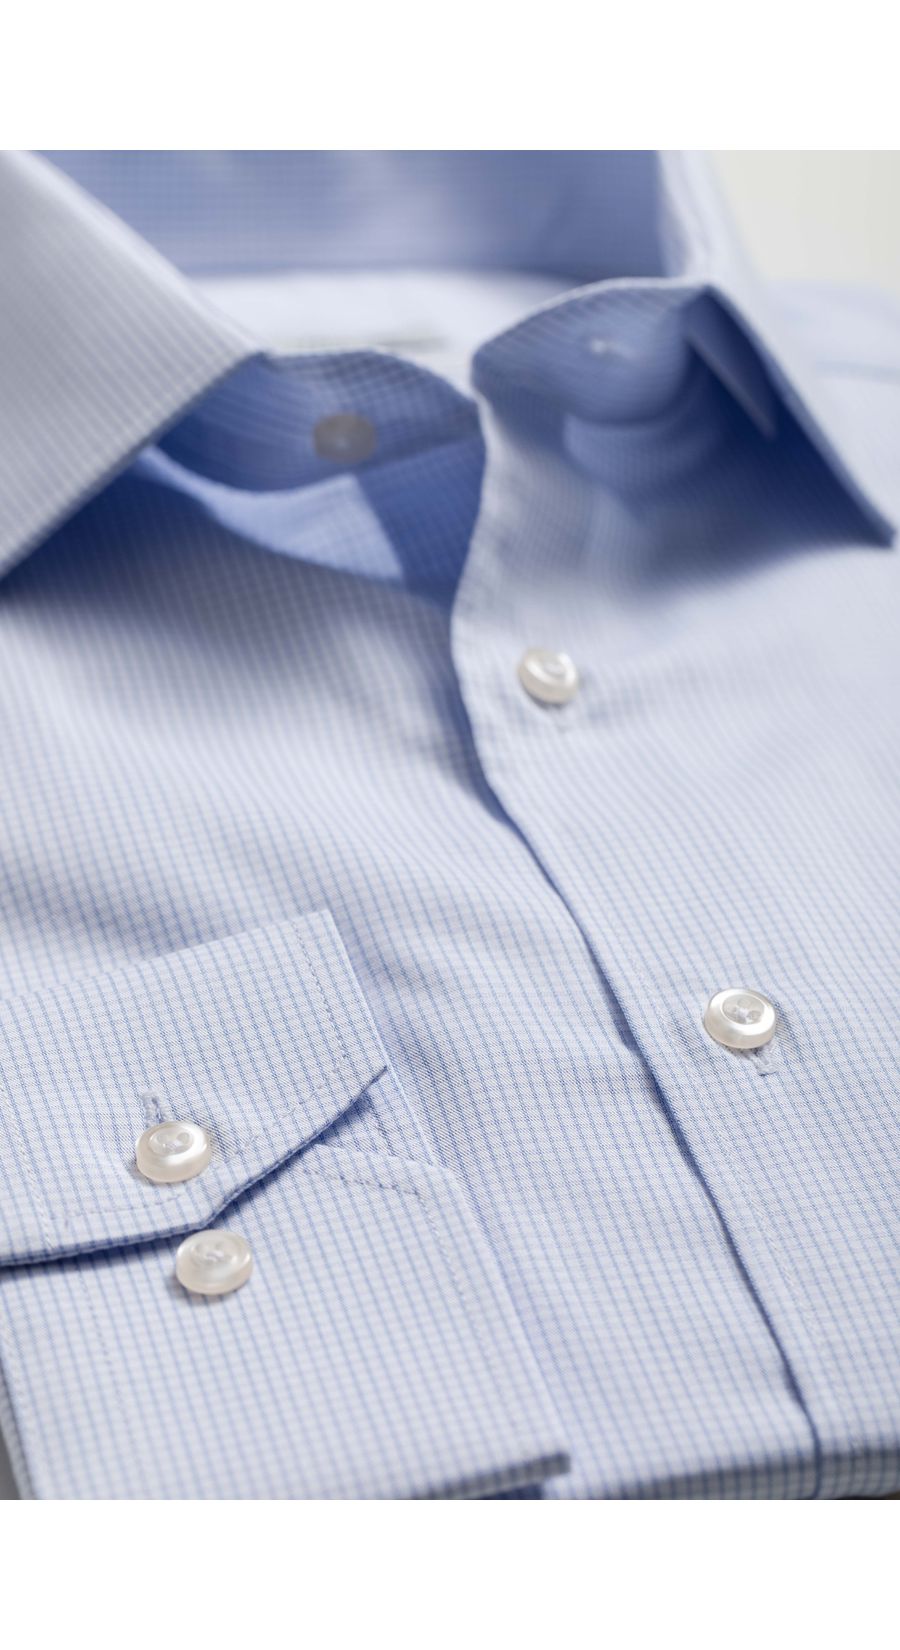 Camisa Social Slim fit Branco quadriculado azul - Diodato Alfaiataria